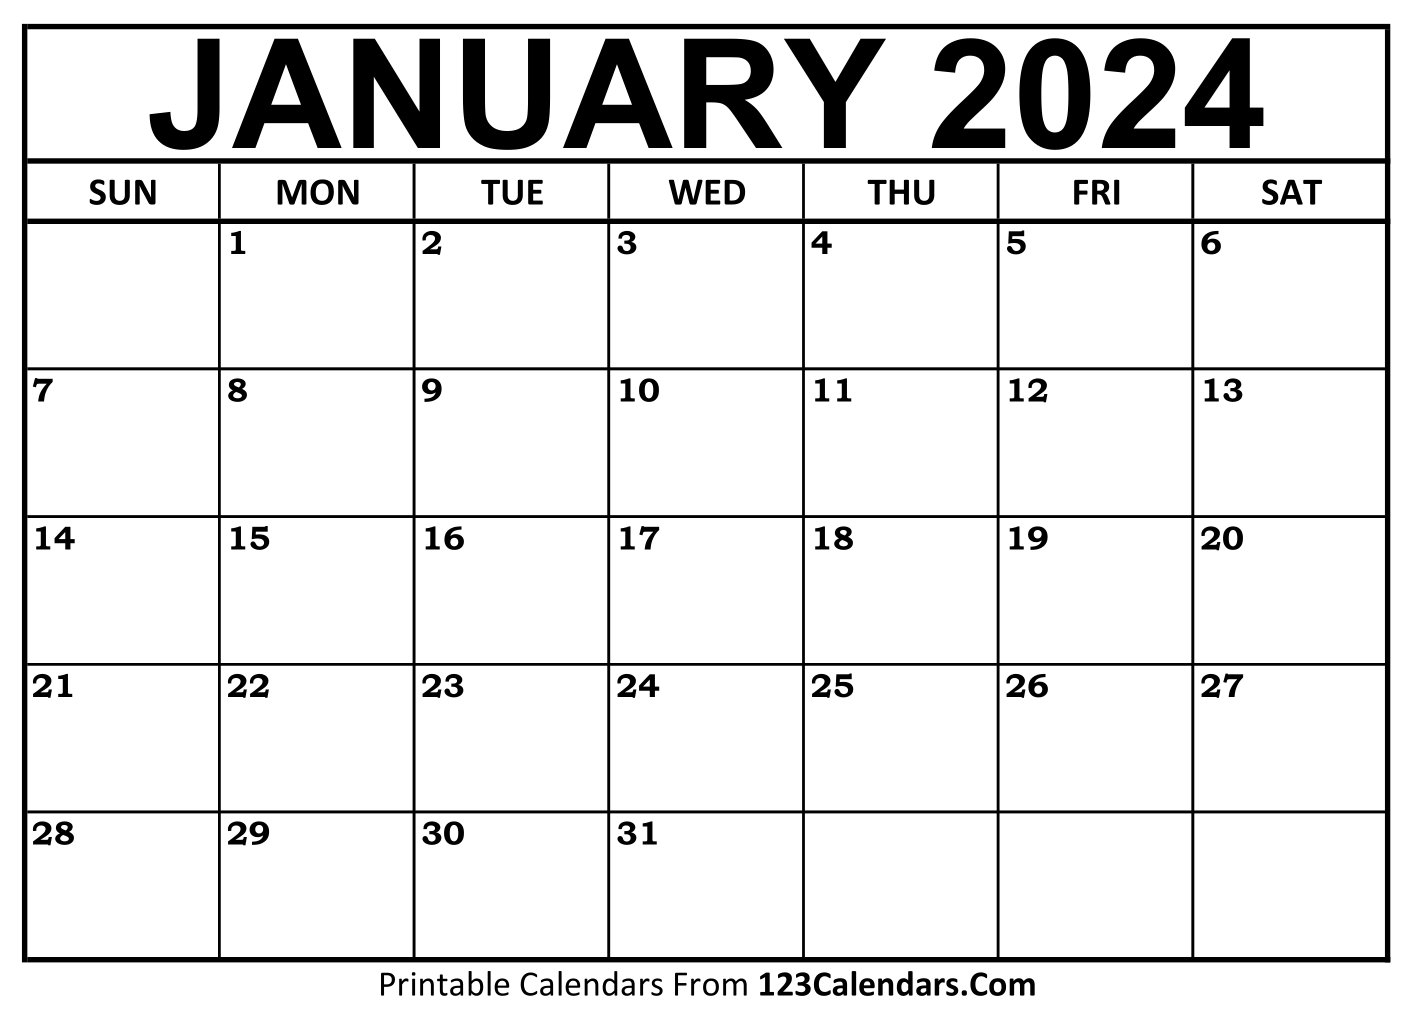 Printable January 2024 Calendar Templates - 123Calendars for January Calendar 2024 Printable